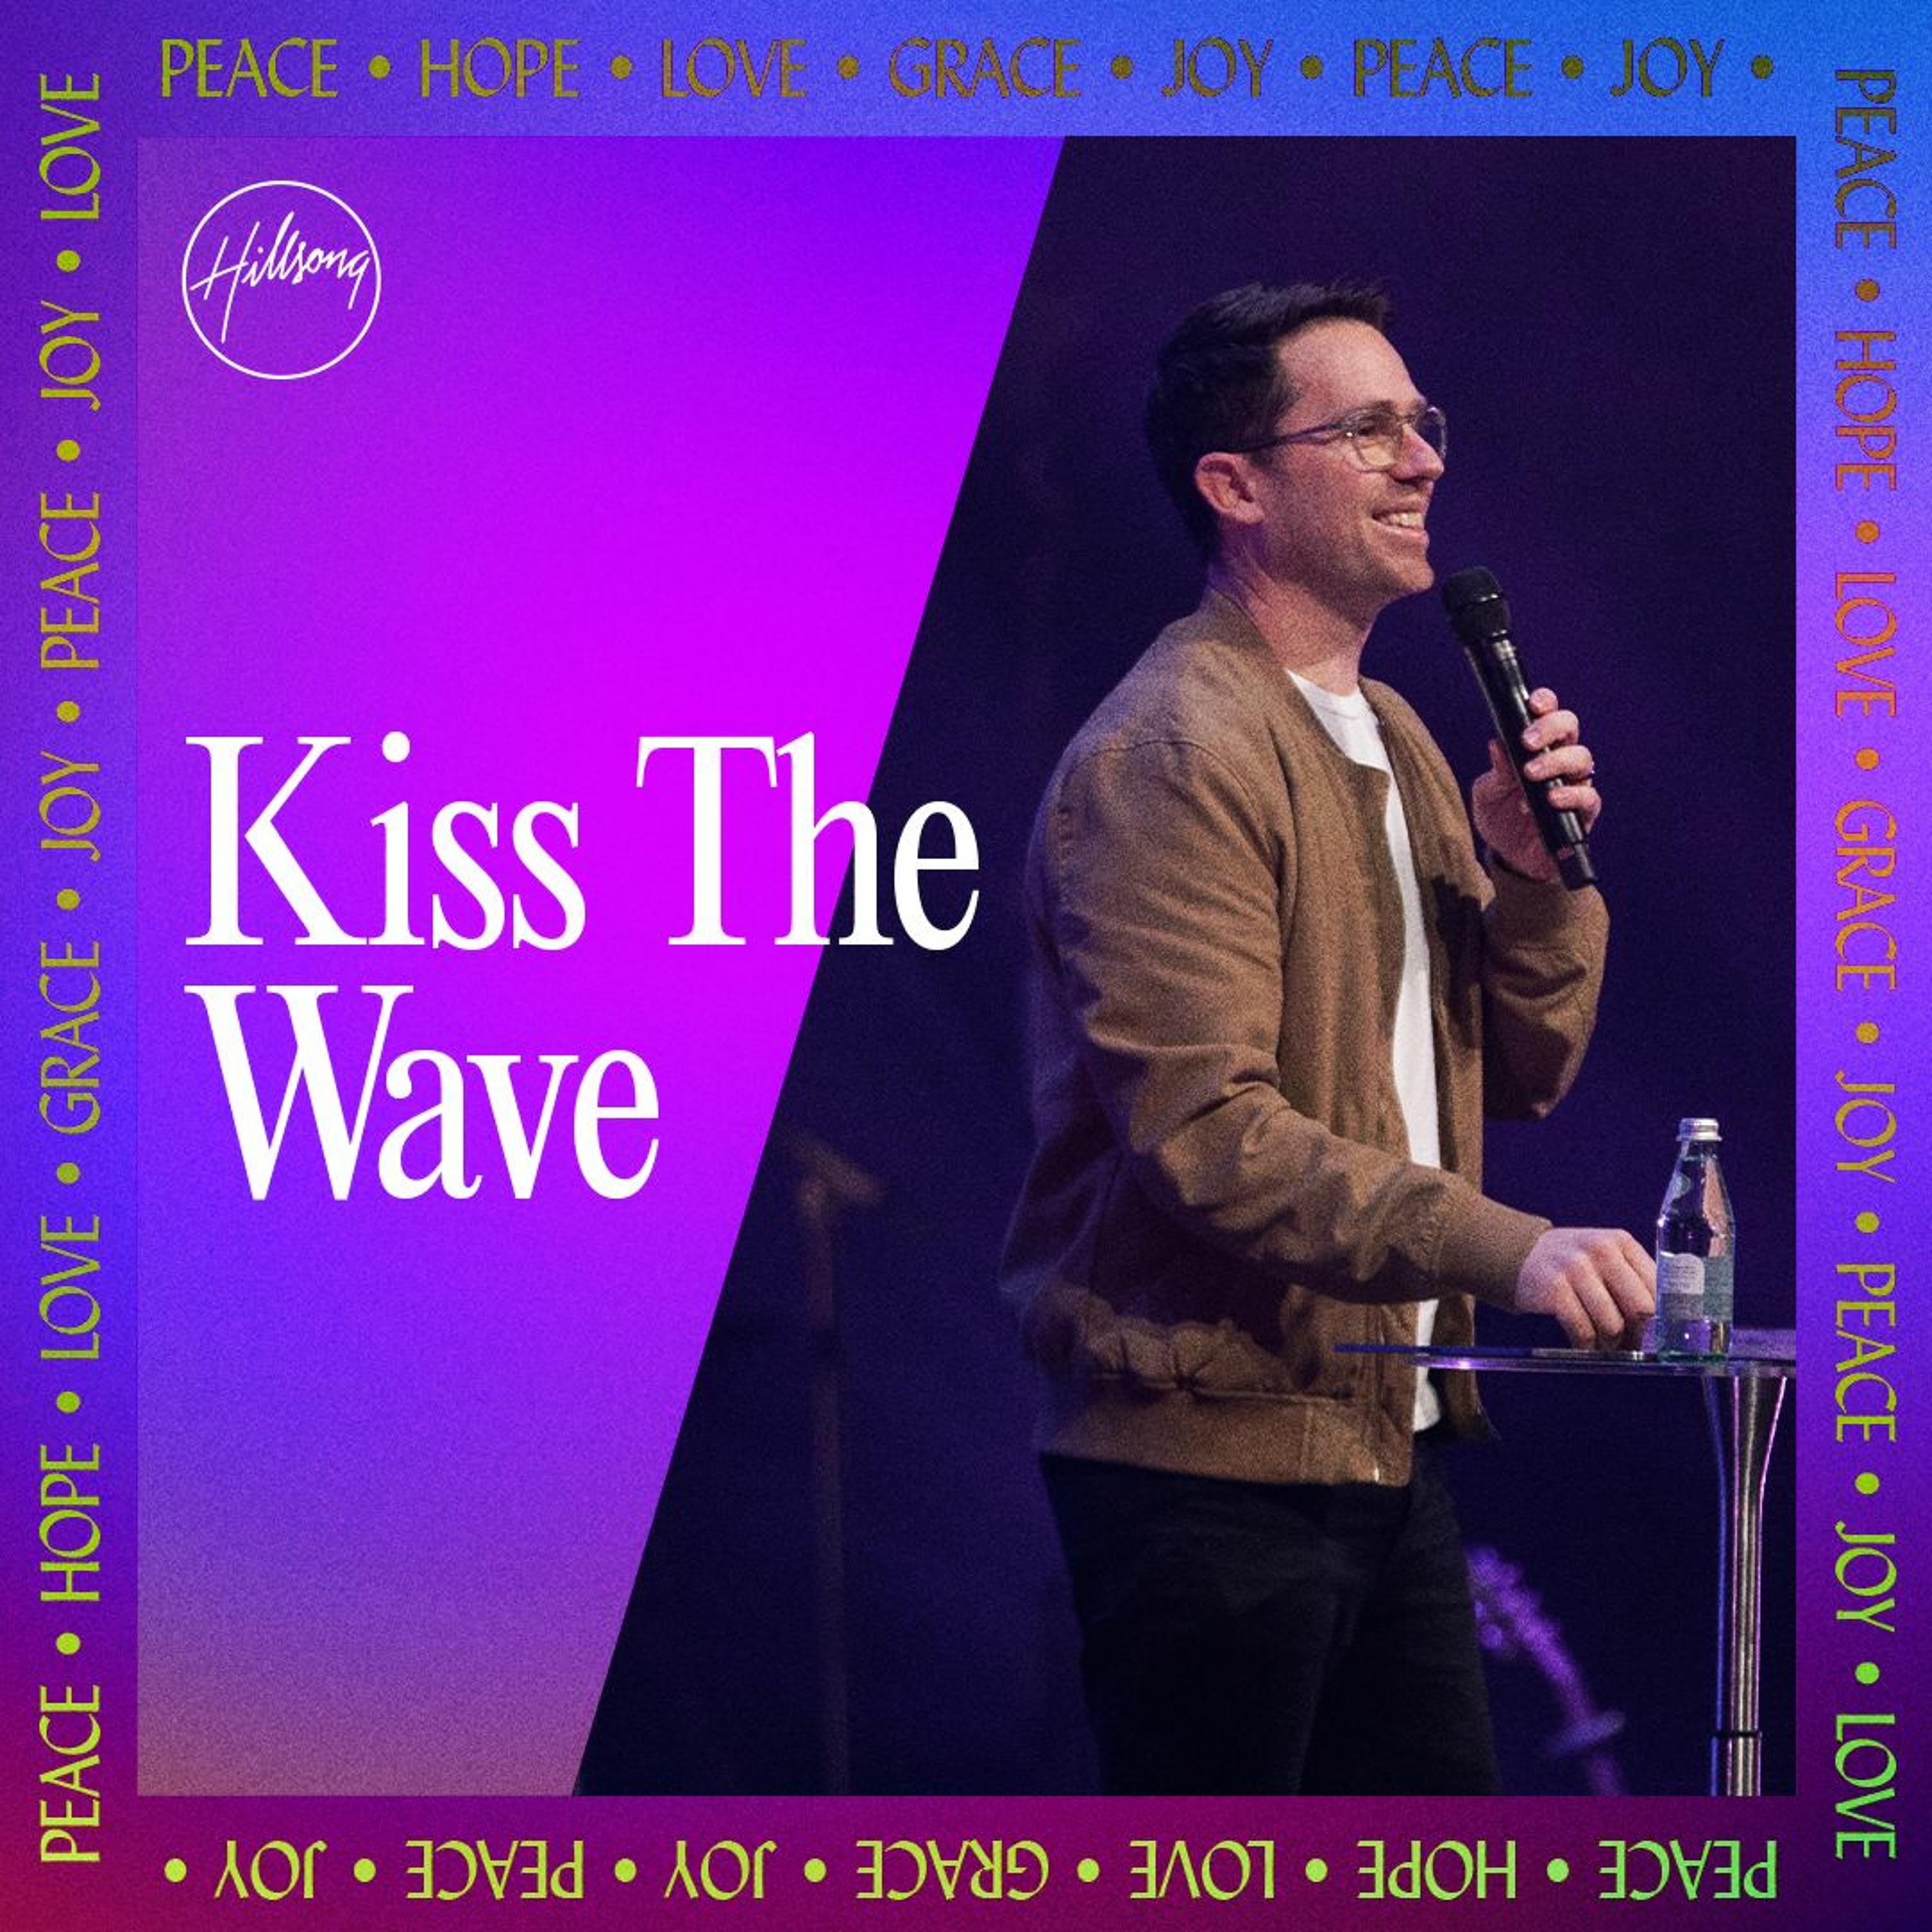 Kiss The Wave - Tim Douglass